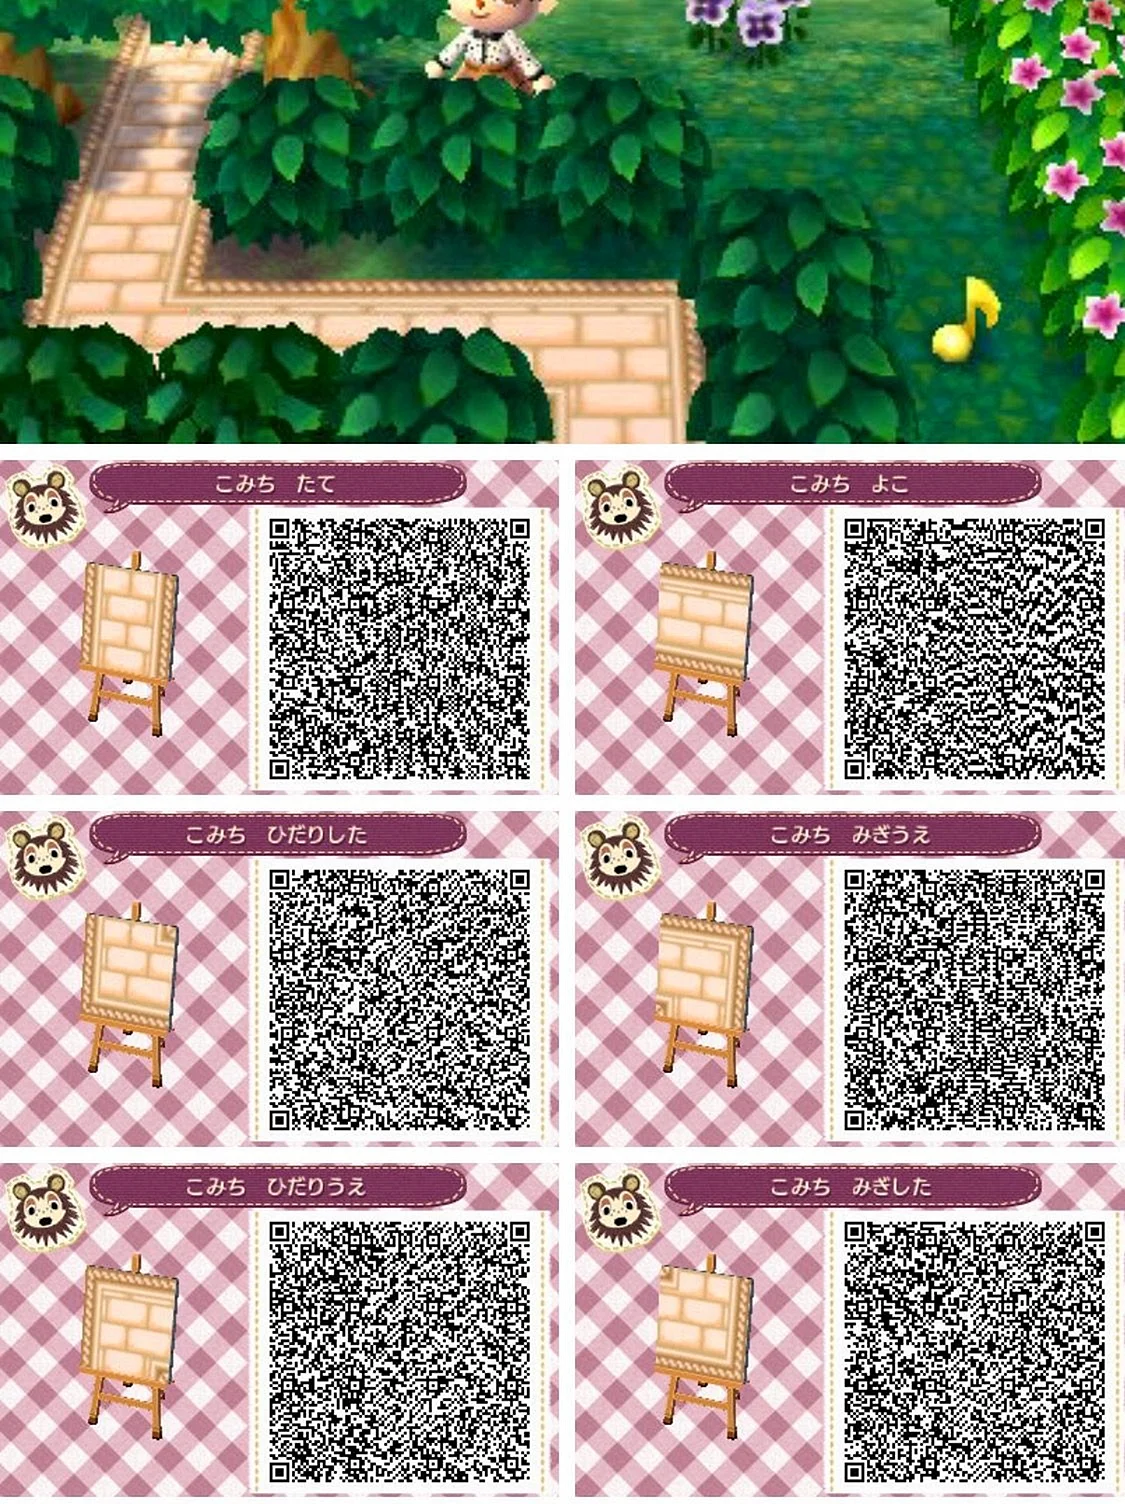 Animal Crossing Qr Code Wallpaper For iPhone